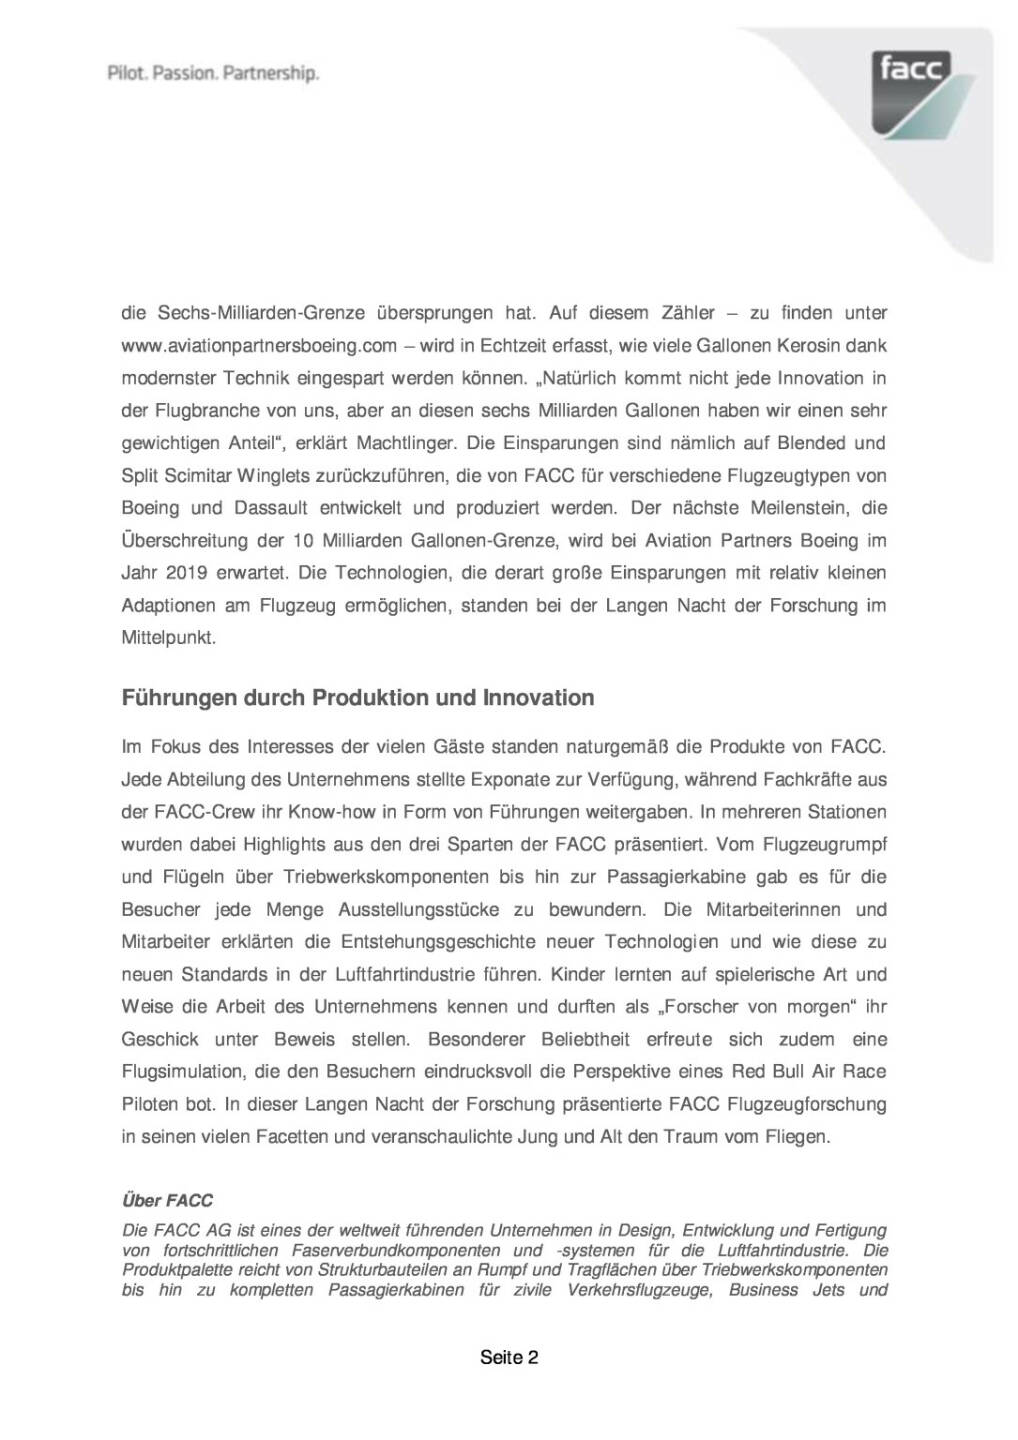 FACC: Lange Nacht der Forschung, Seite 2/4, komplettes Dokument unter http://boerse-social.com/static/uploads/file_940_facc_lange_nacht_der_forschung.pdf